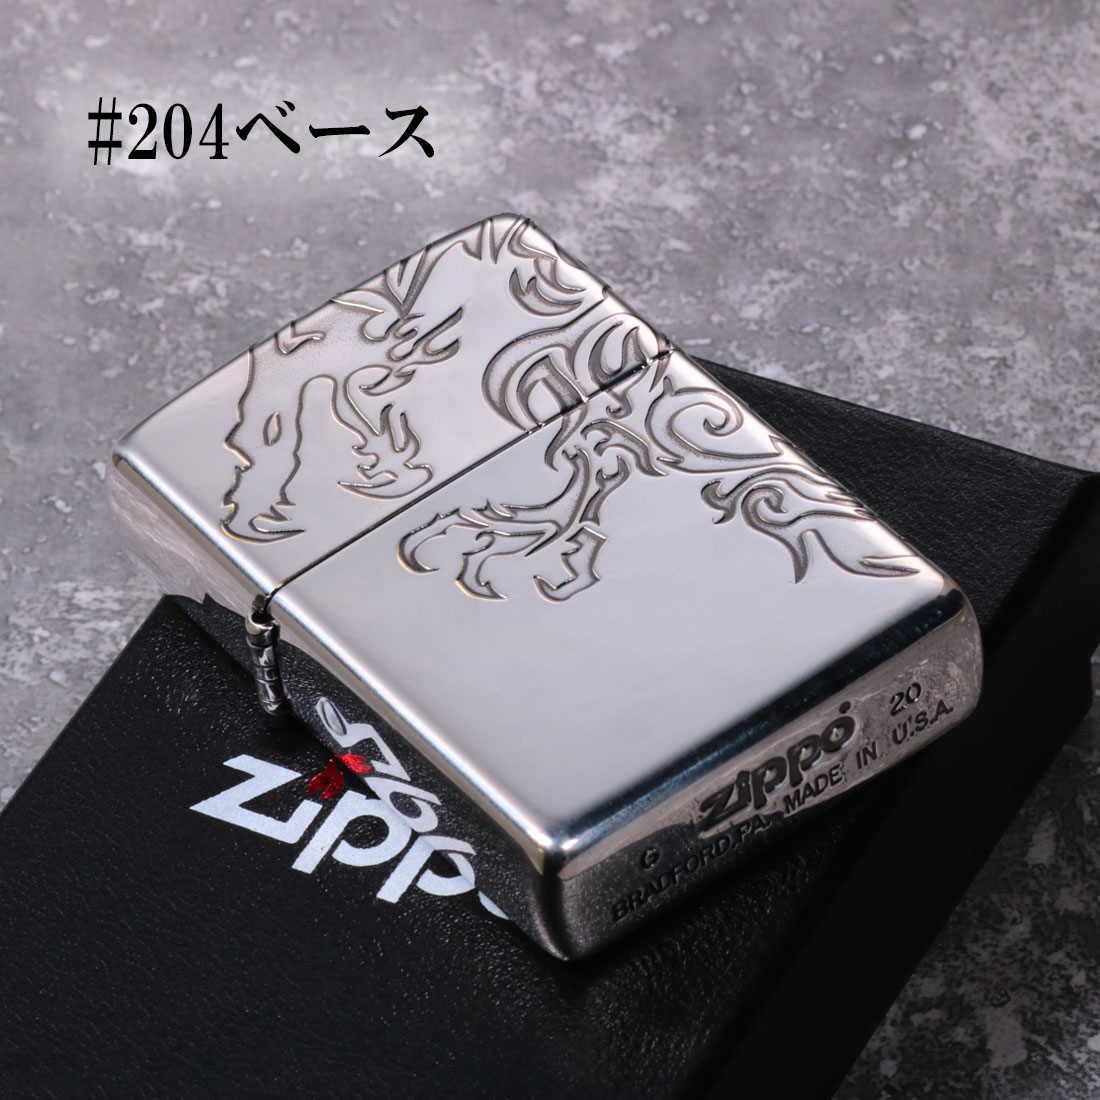 zippo(ジッポーライター)三面連続深彫りエッチングSTREAM DORAGON B 銀